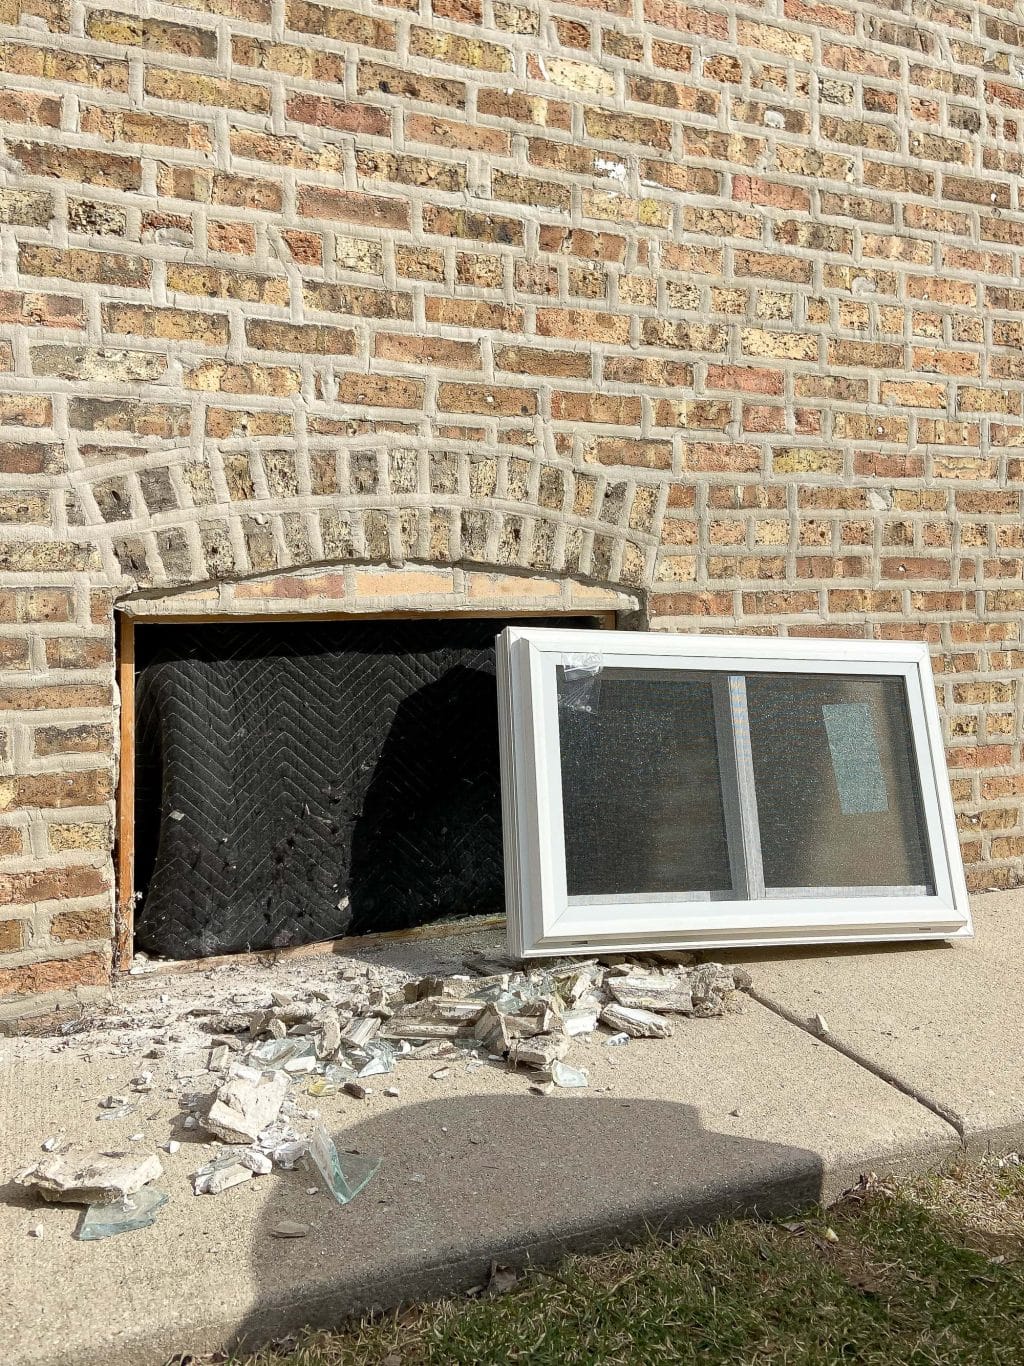 Installing new basement windows